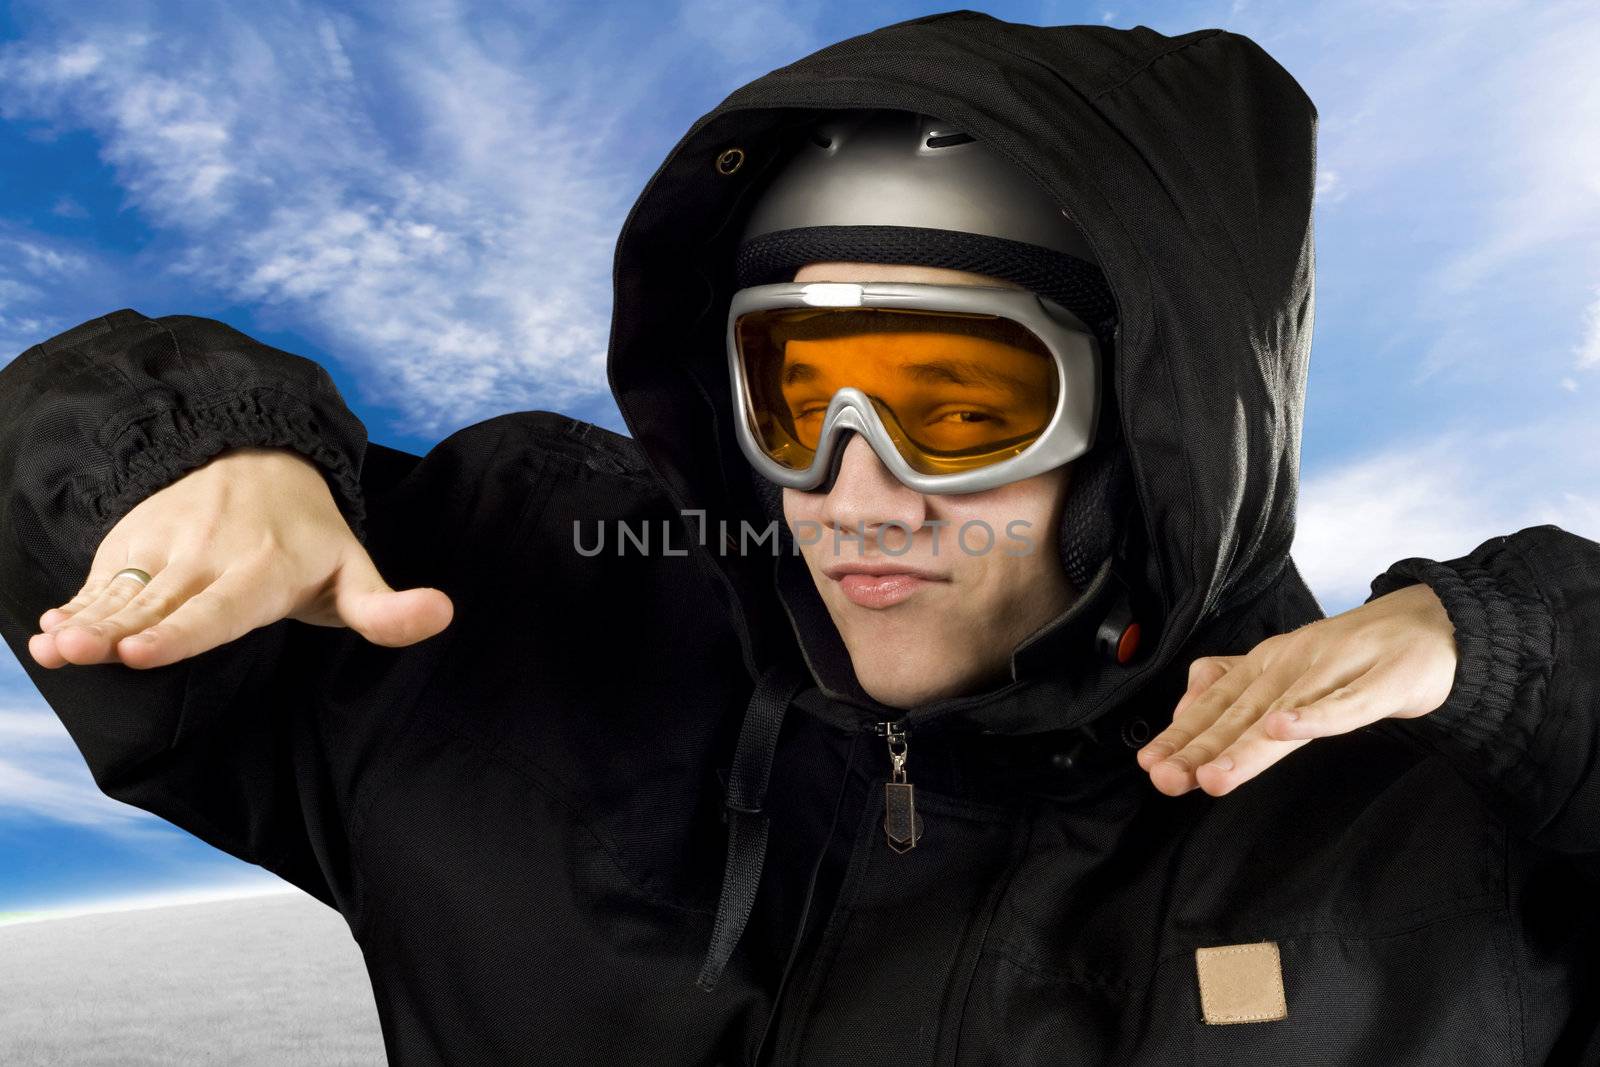 Ironic boy snowboarding by domencolja